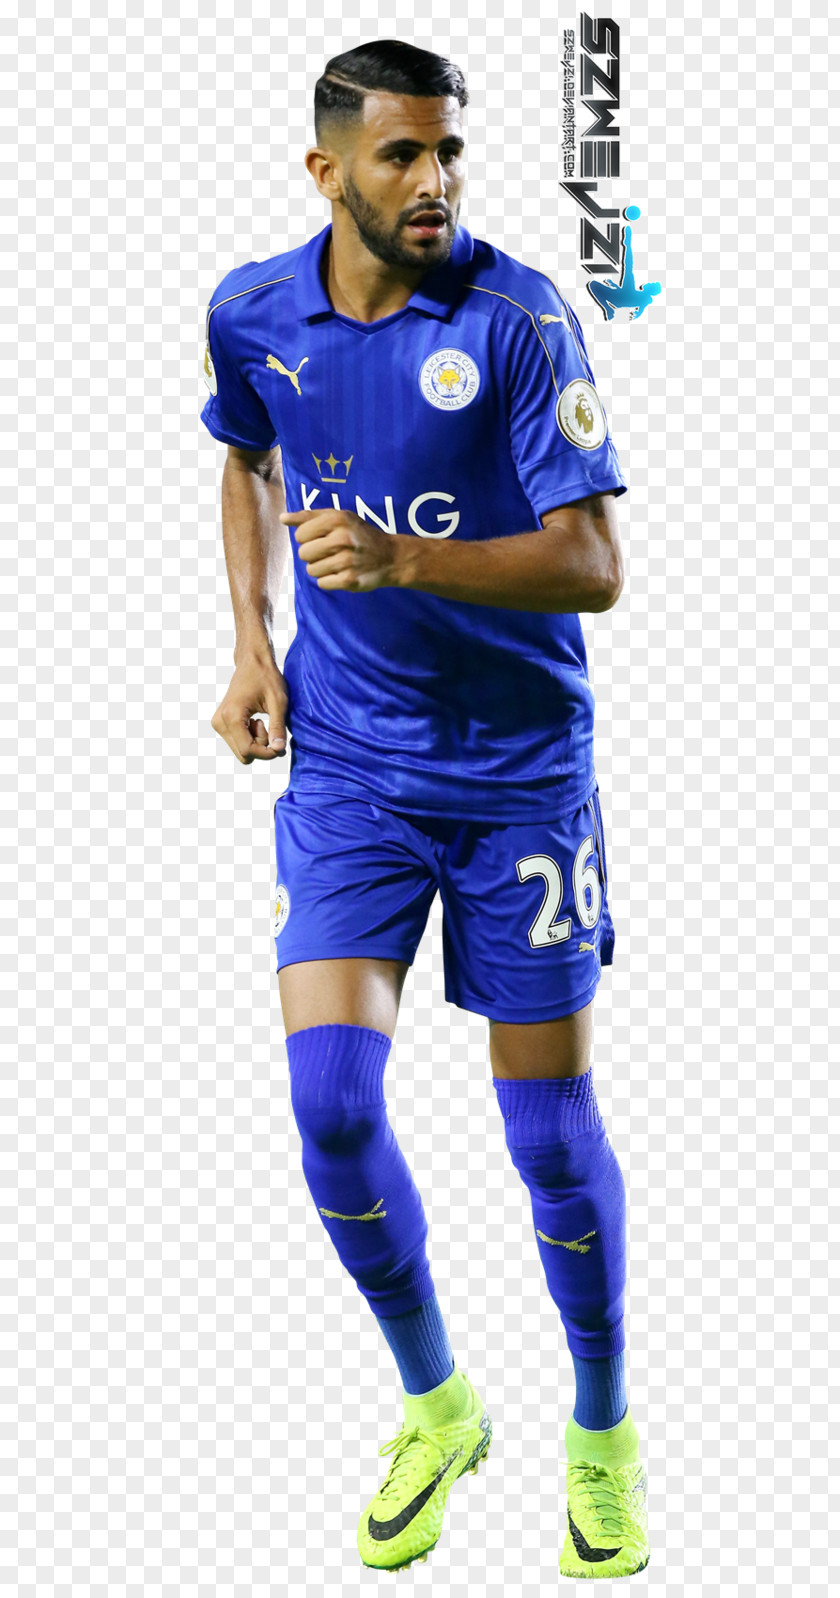 RIYAD MAHREZ Riyad Mahrez Soccer Player Leicester City F.C. Football Rendering PNG